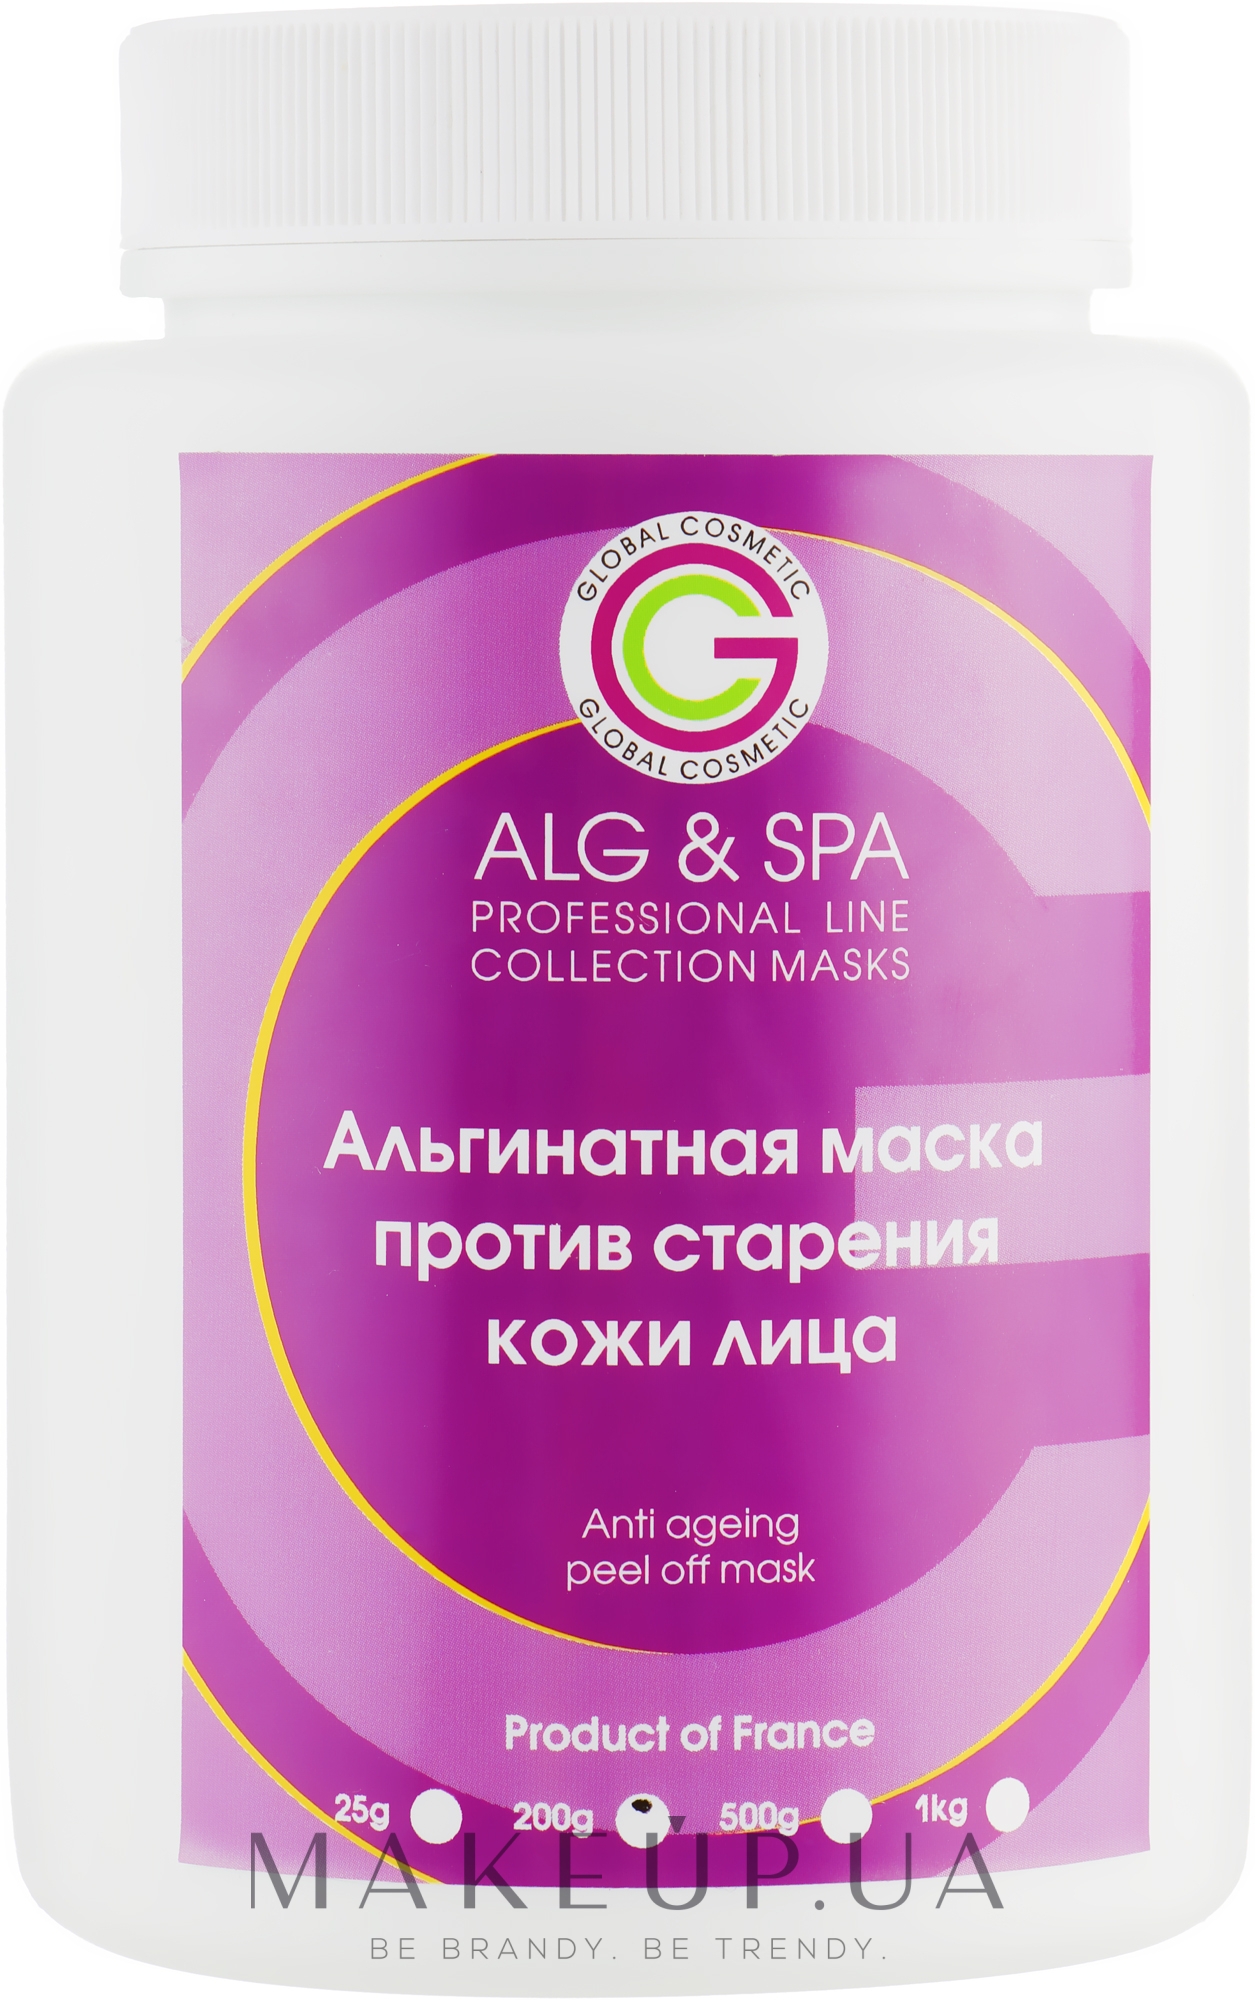 Альгінатна маска проти старіння шкіри обличчя - ALG & SPA Professional Line Collection Masks Anti Ageing Peel off Mask — фото 200g